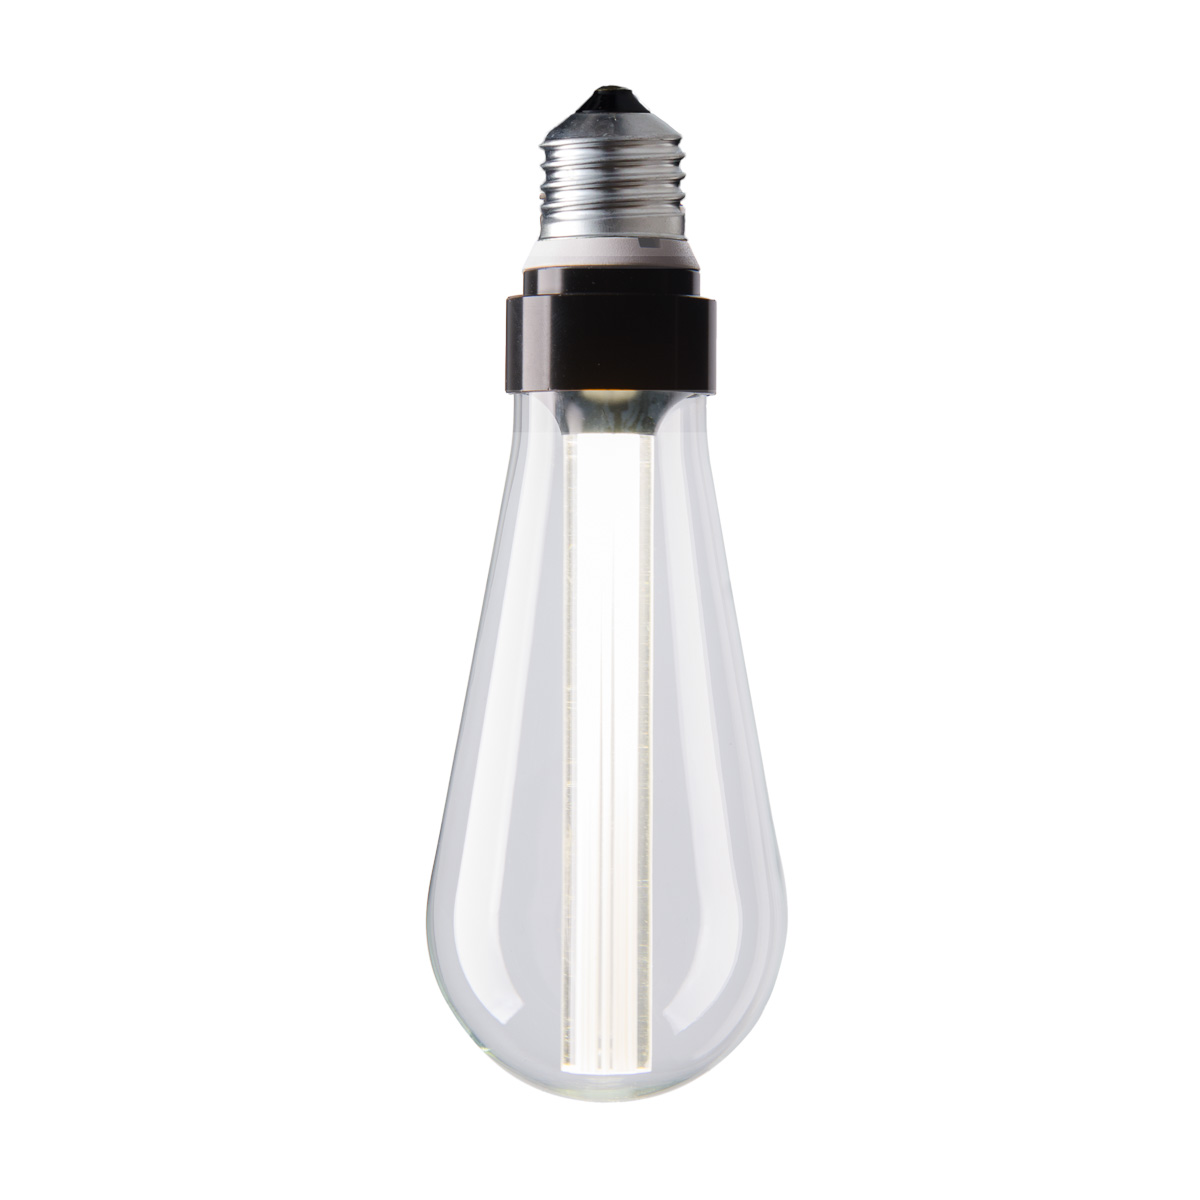 Decorative lamp Edison ST 64 LED Glow Stick-White / Transparent